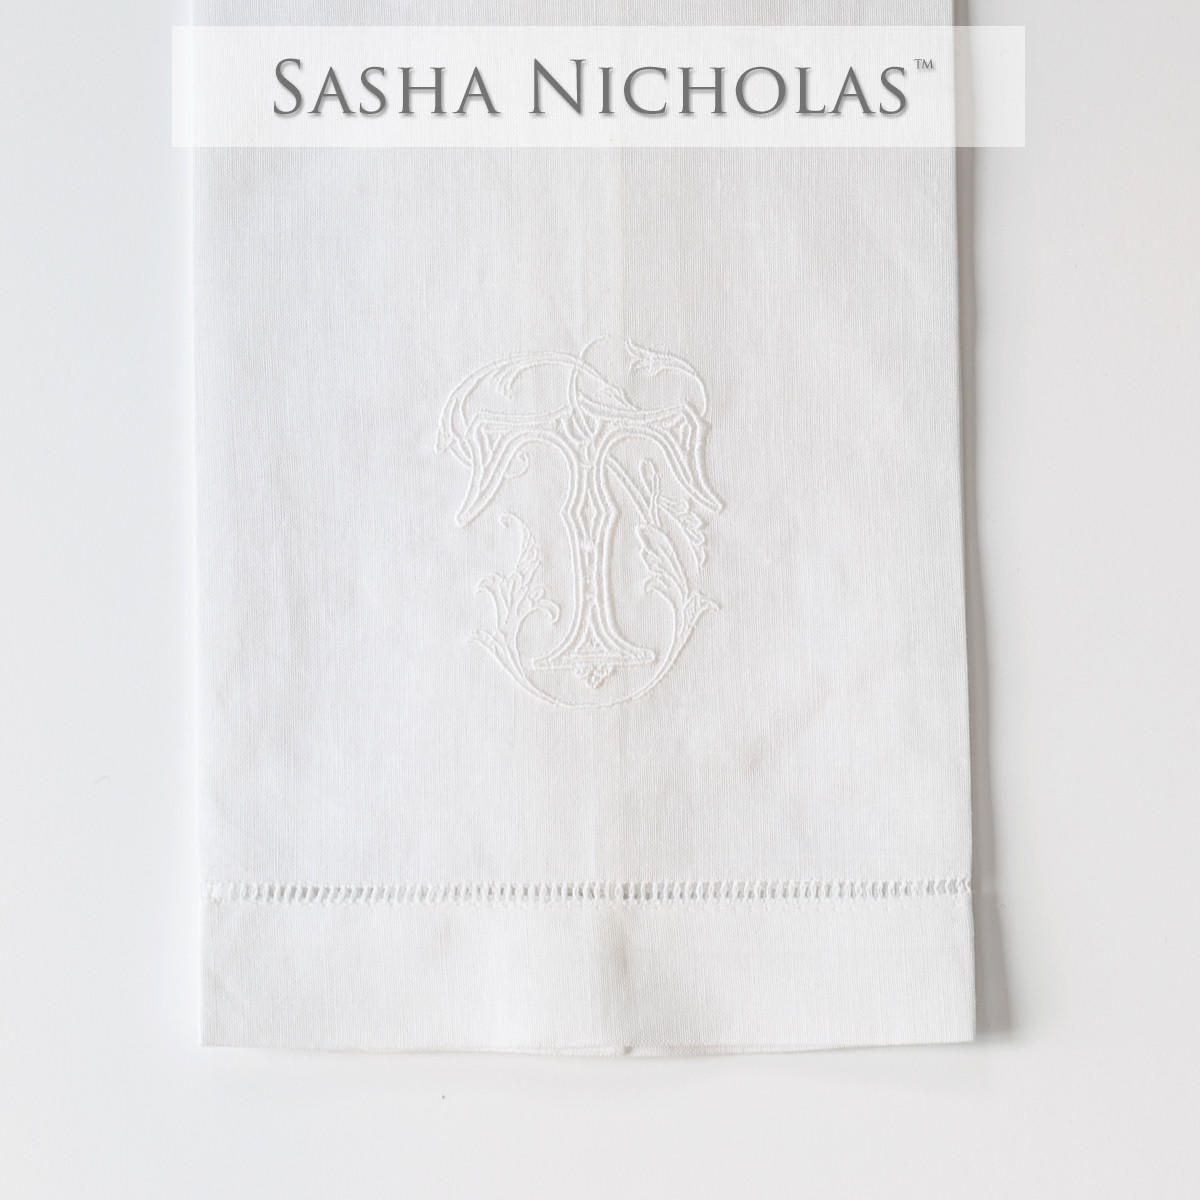 Finn-heath Sasha Nicholas White Linen Hand Towel, Couture Monogram, Finn-Heath SNLIN120, Sasha Nicholas